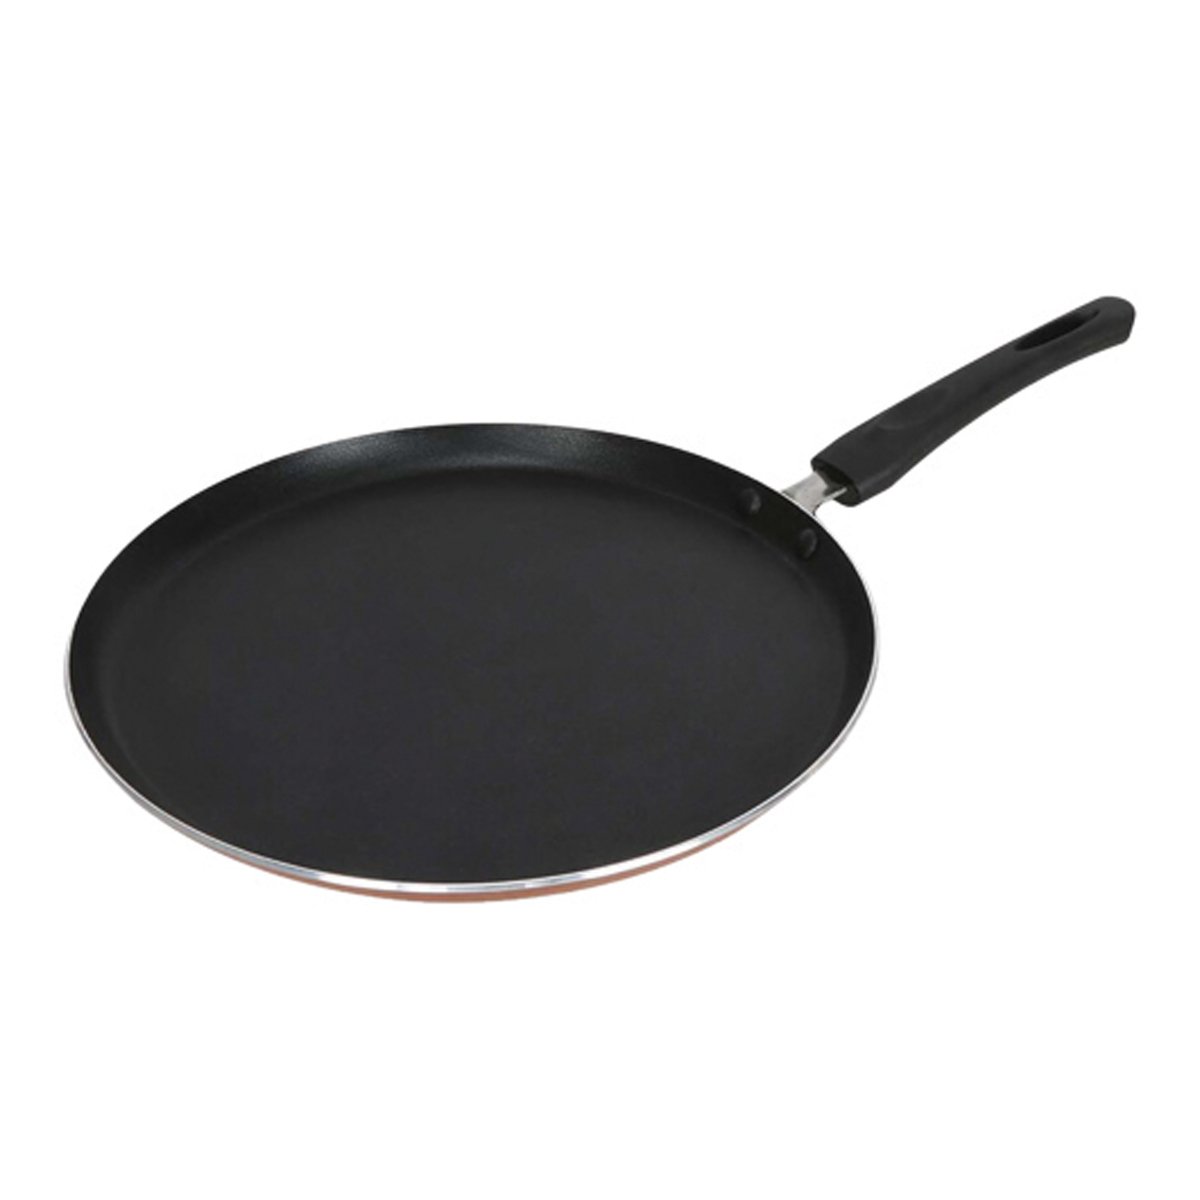 Chefline Non-Stick Crepe Pan, 28 cm